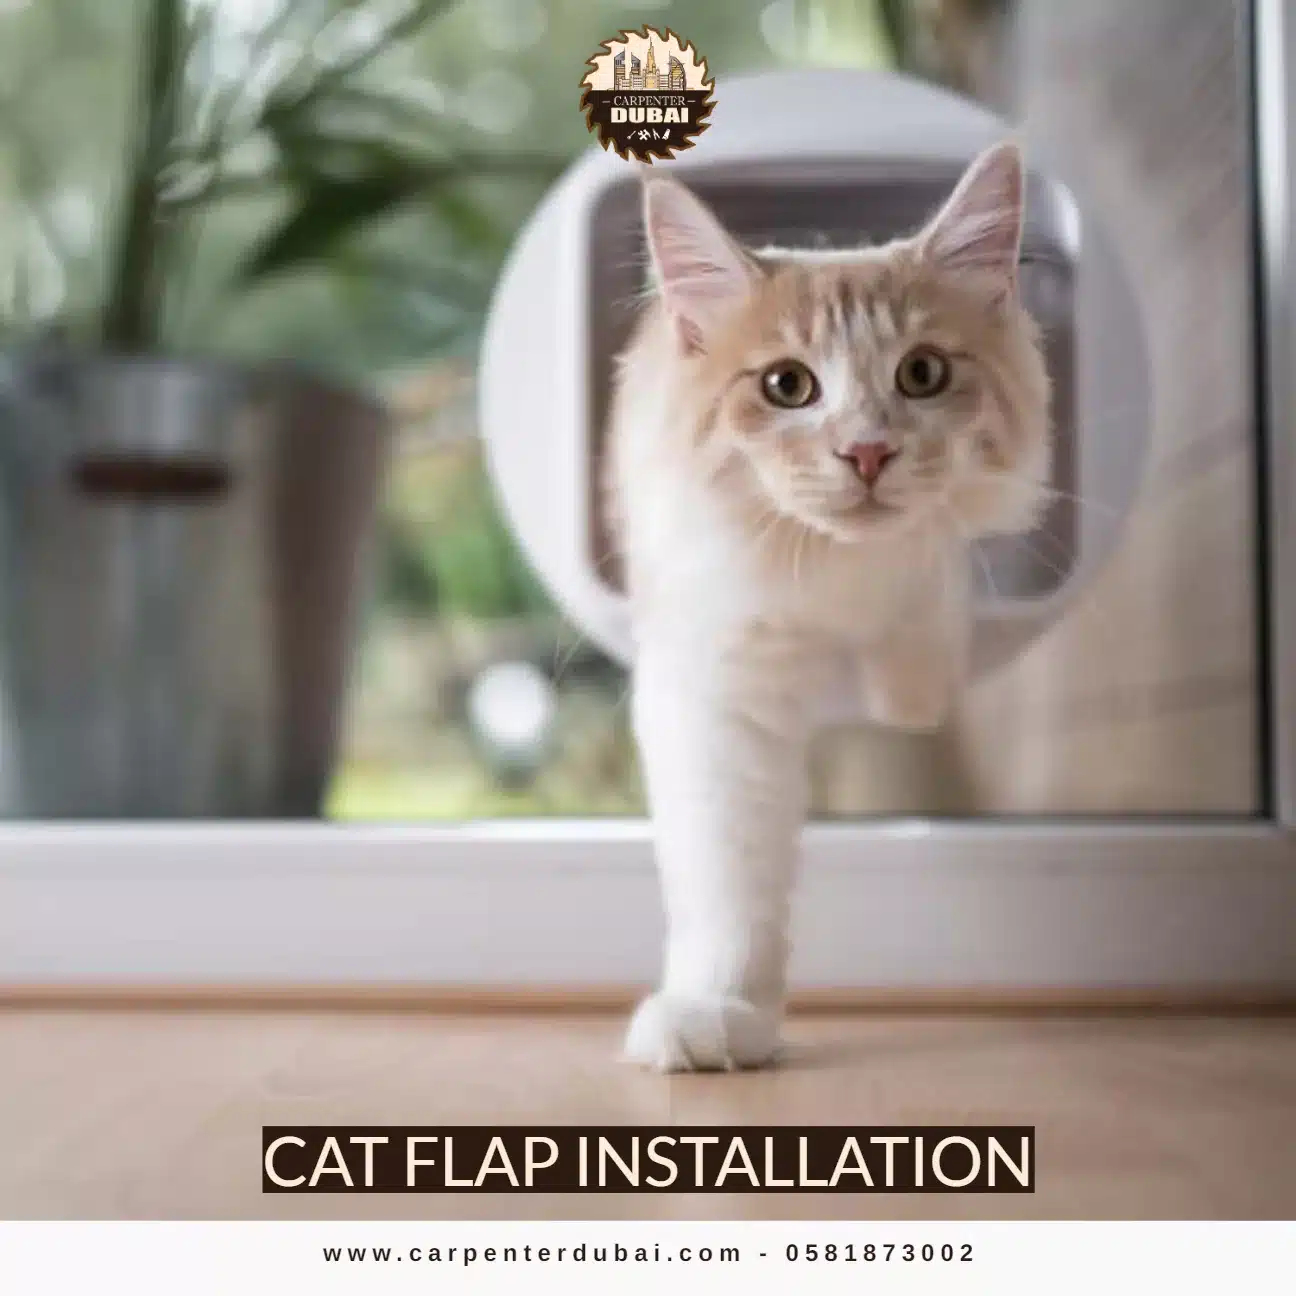 Cat flap installation